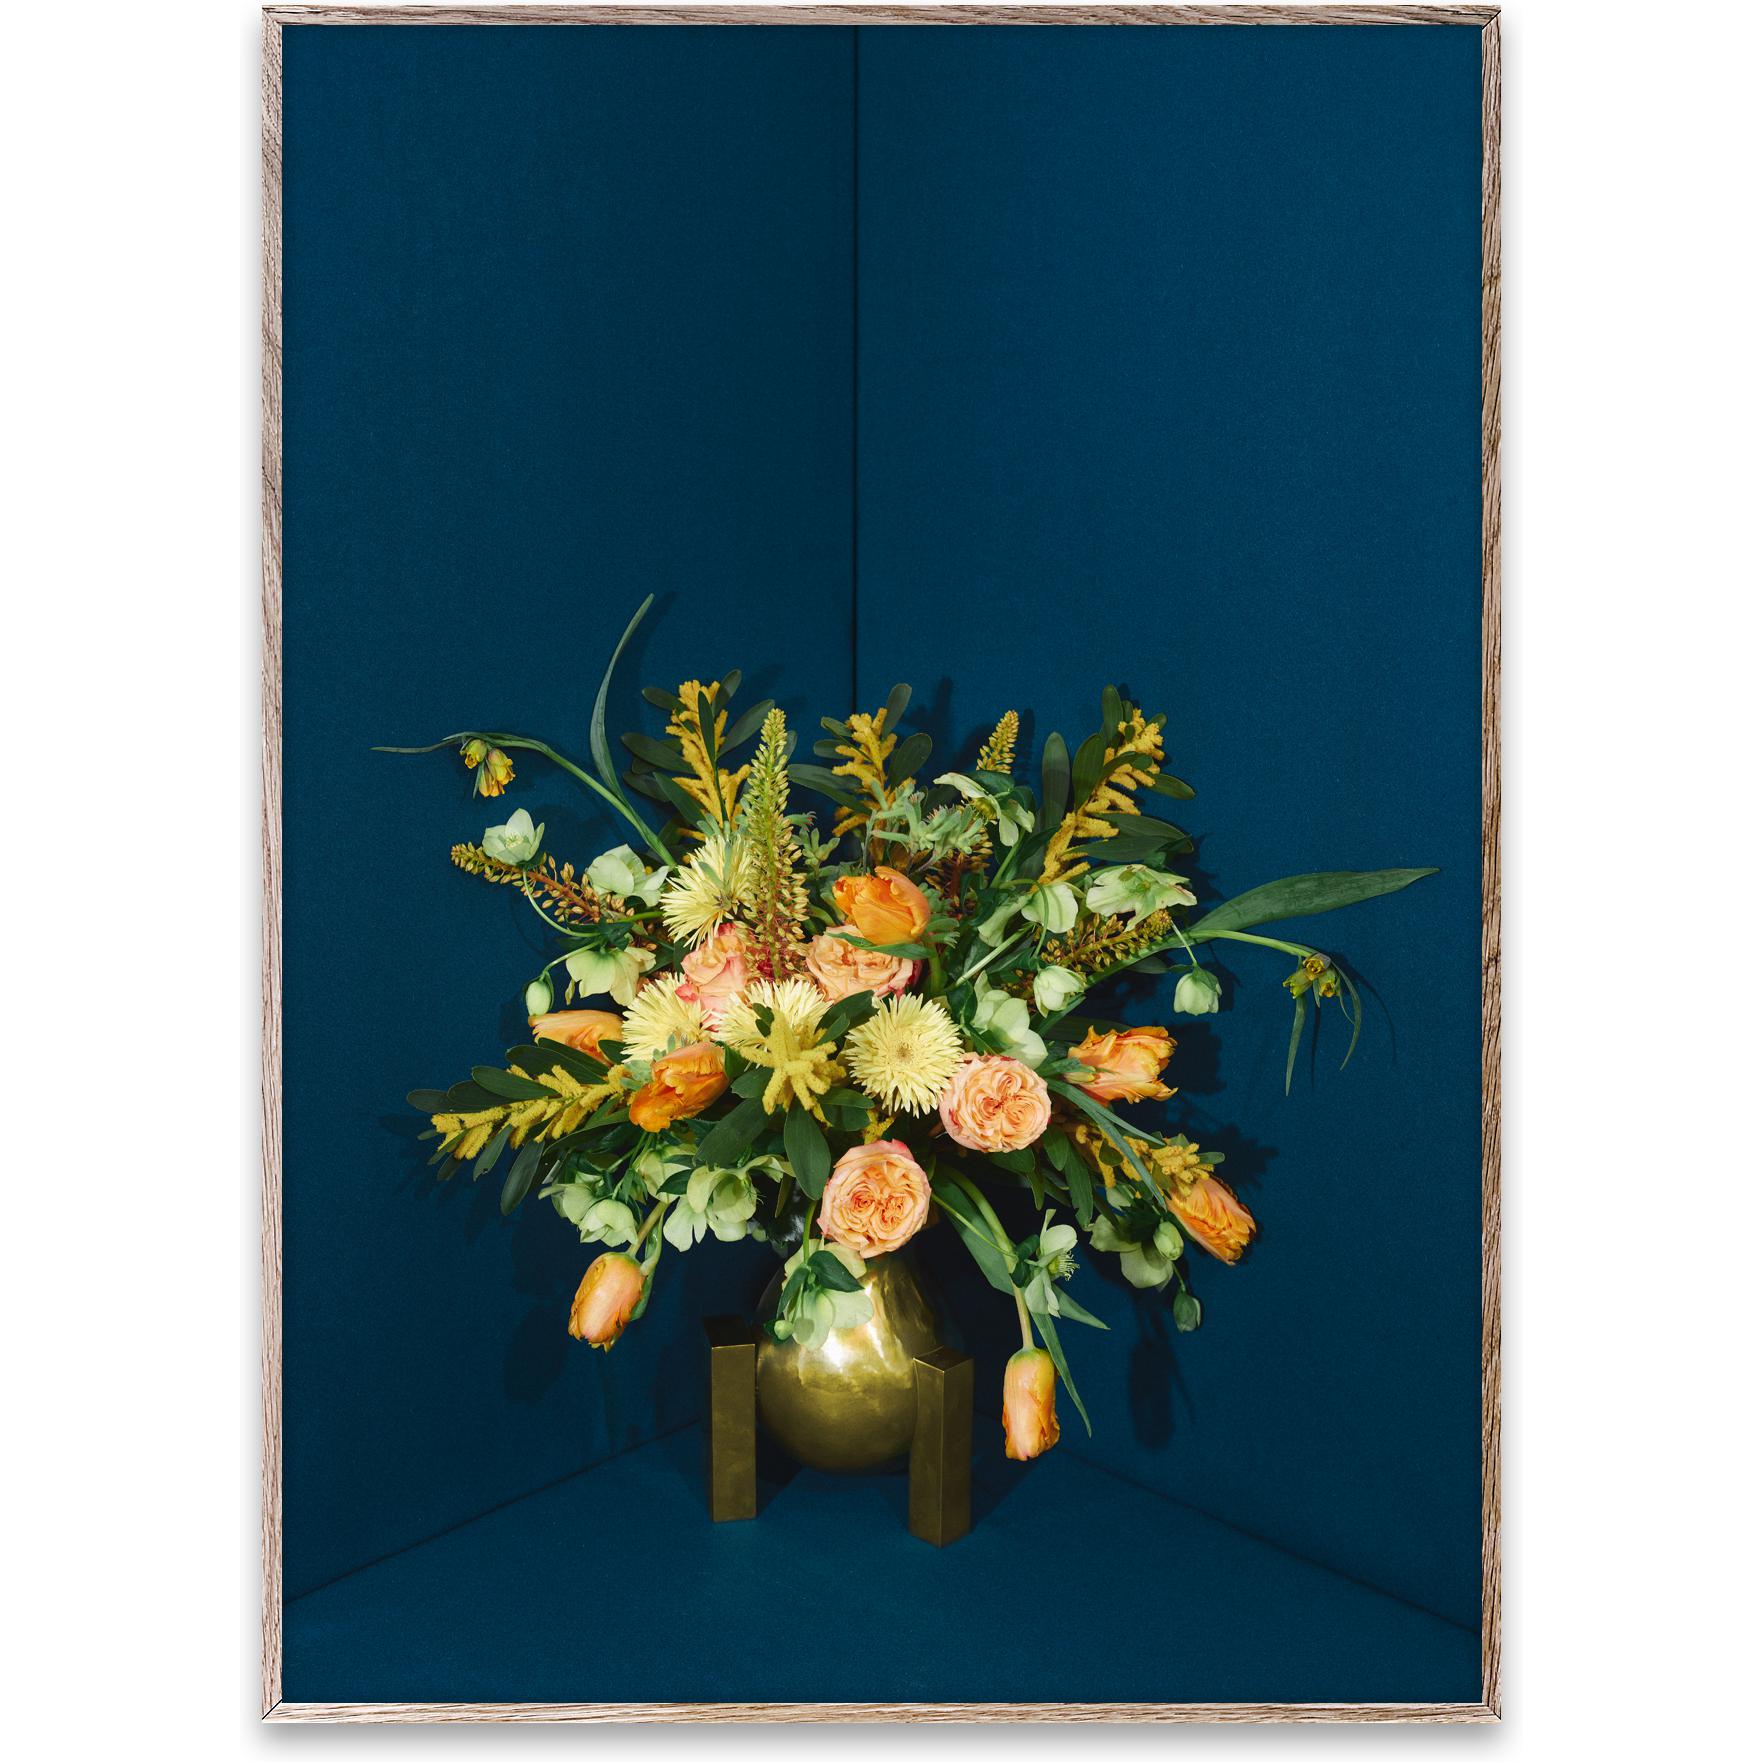 Paper Collective Blomst 05 Poster 30 x 40 cm, bleu sarcelle